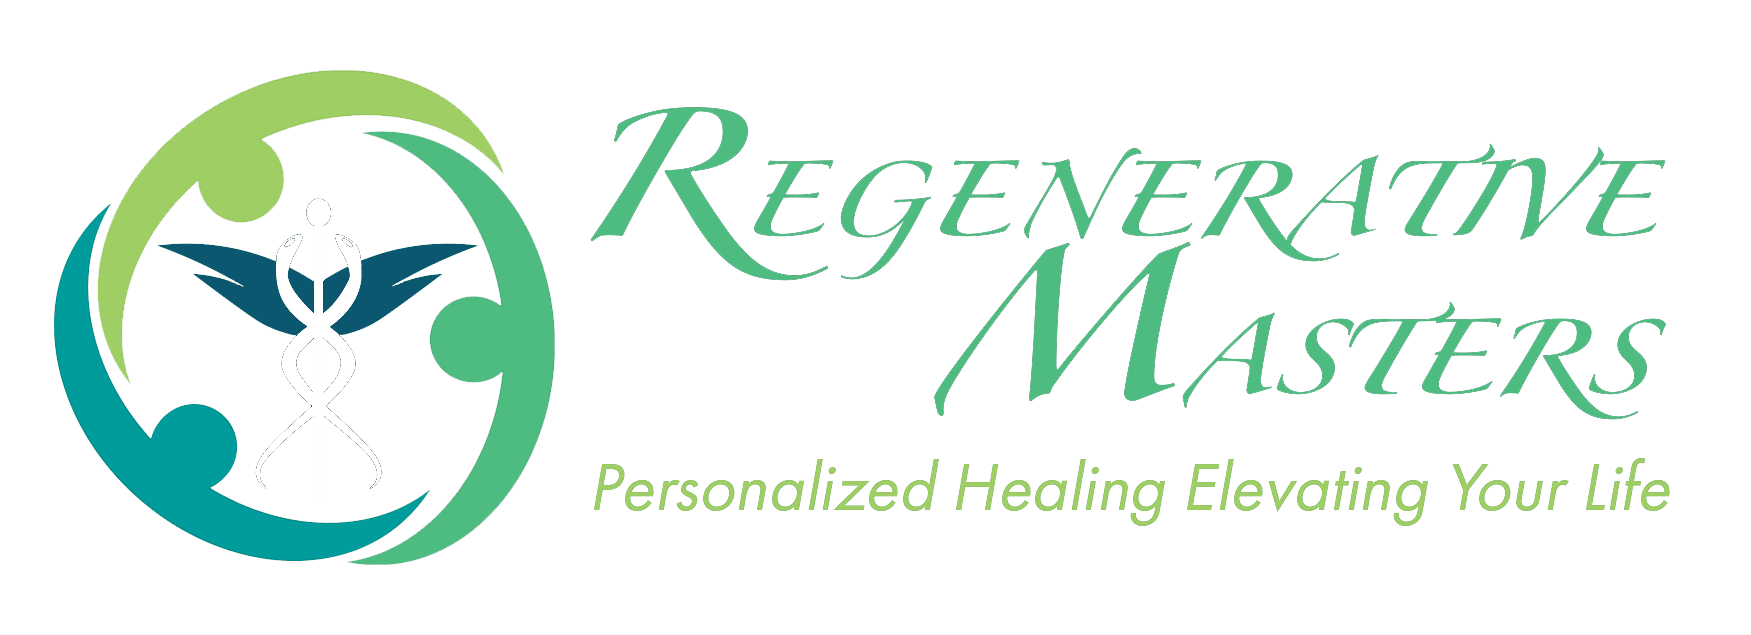 Regenerative Masters logo